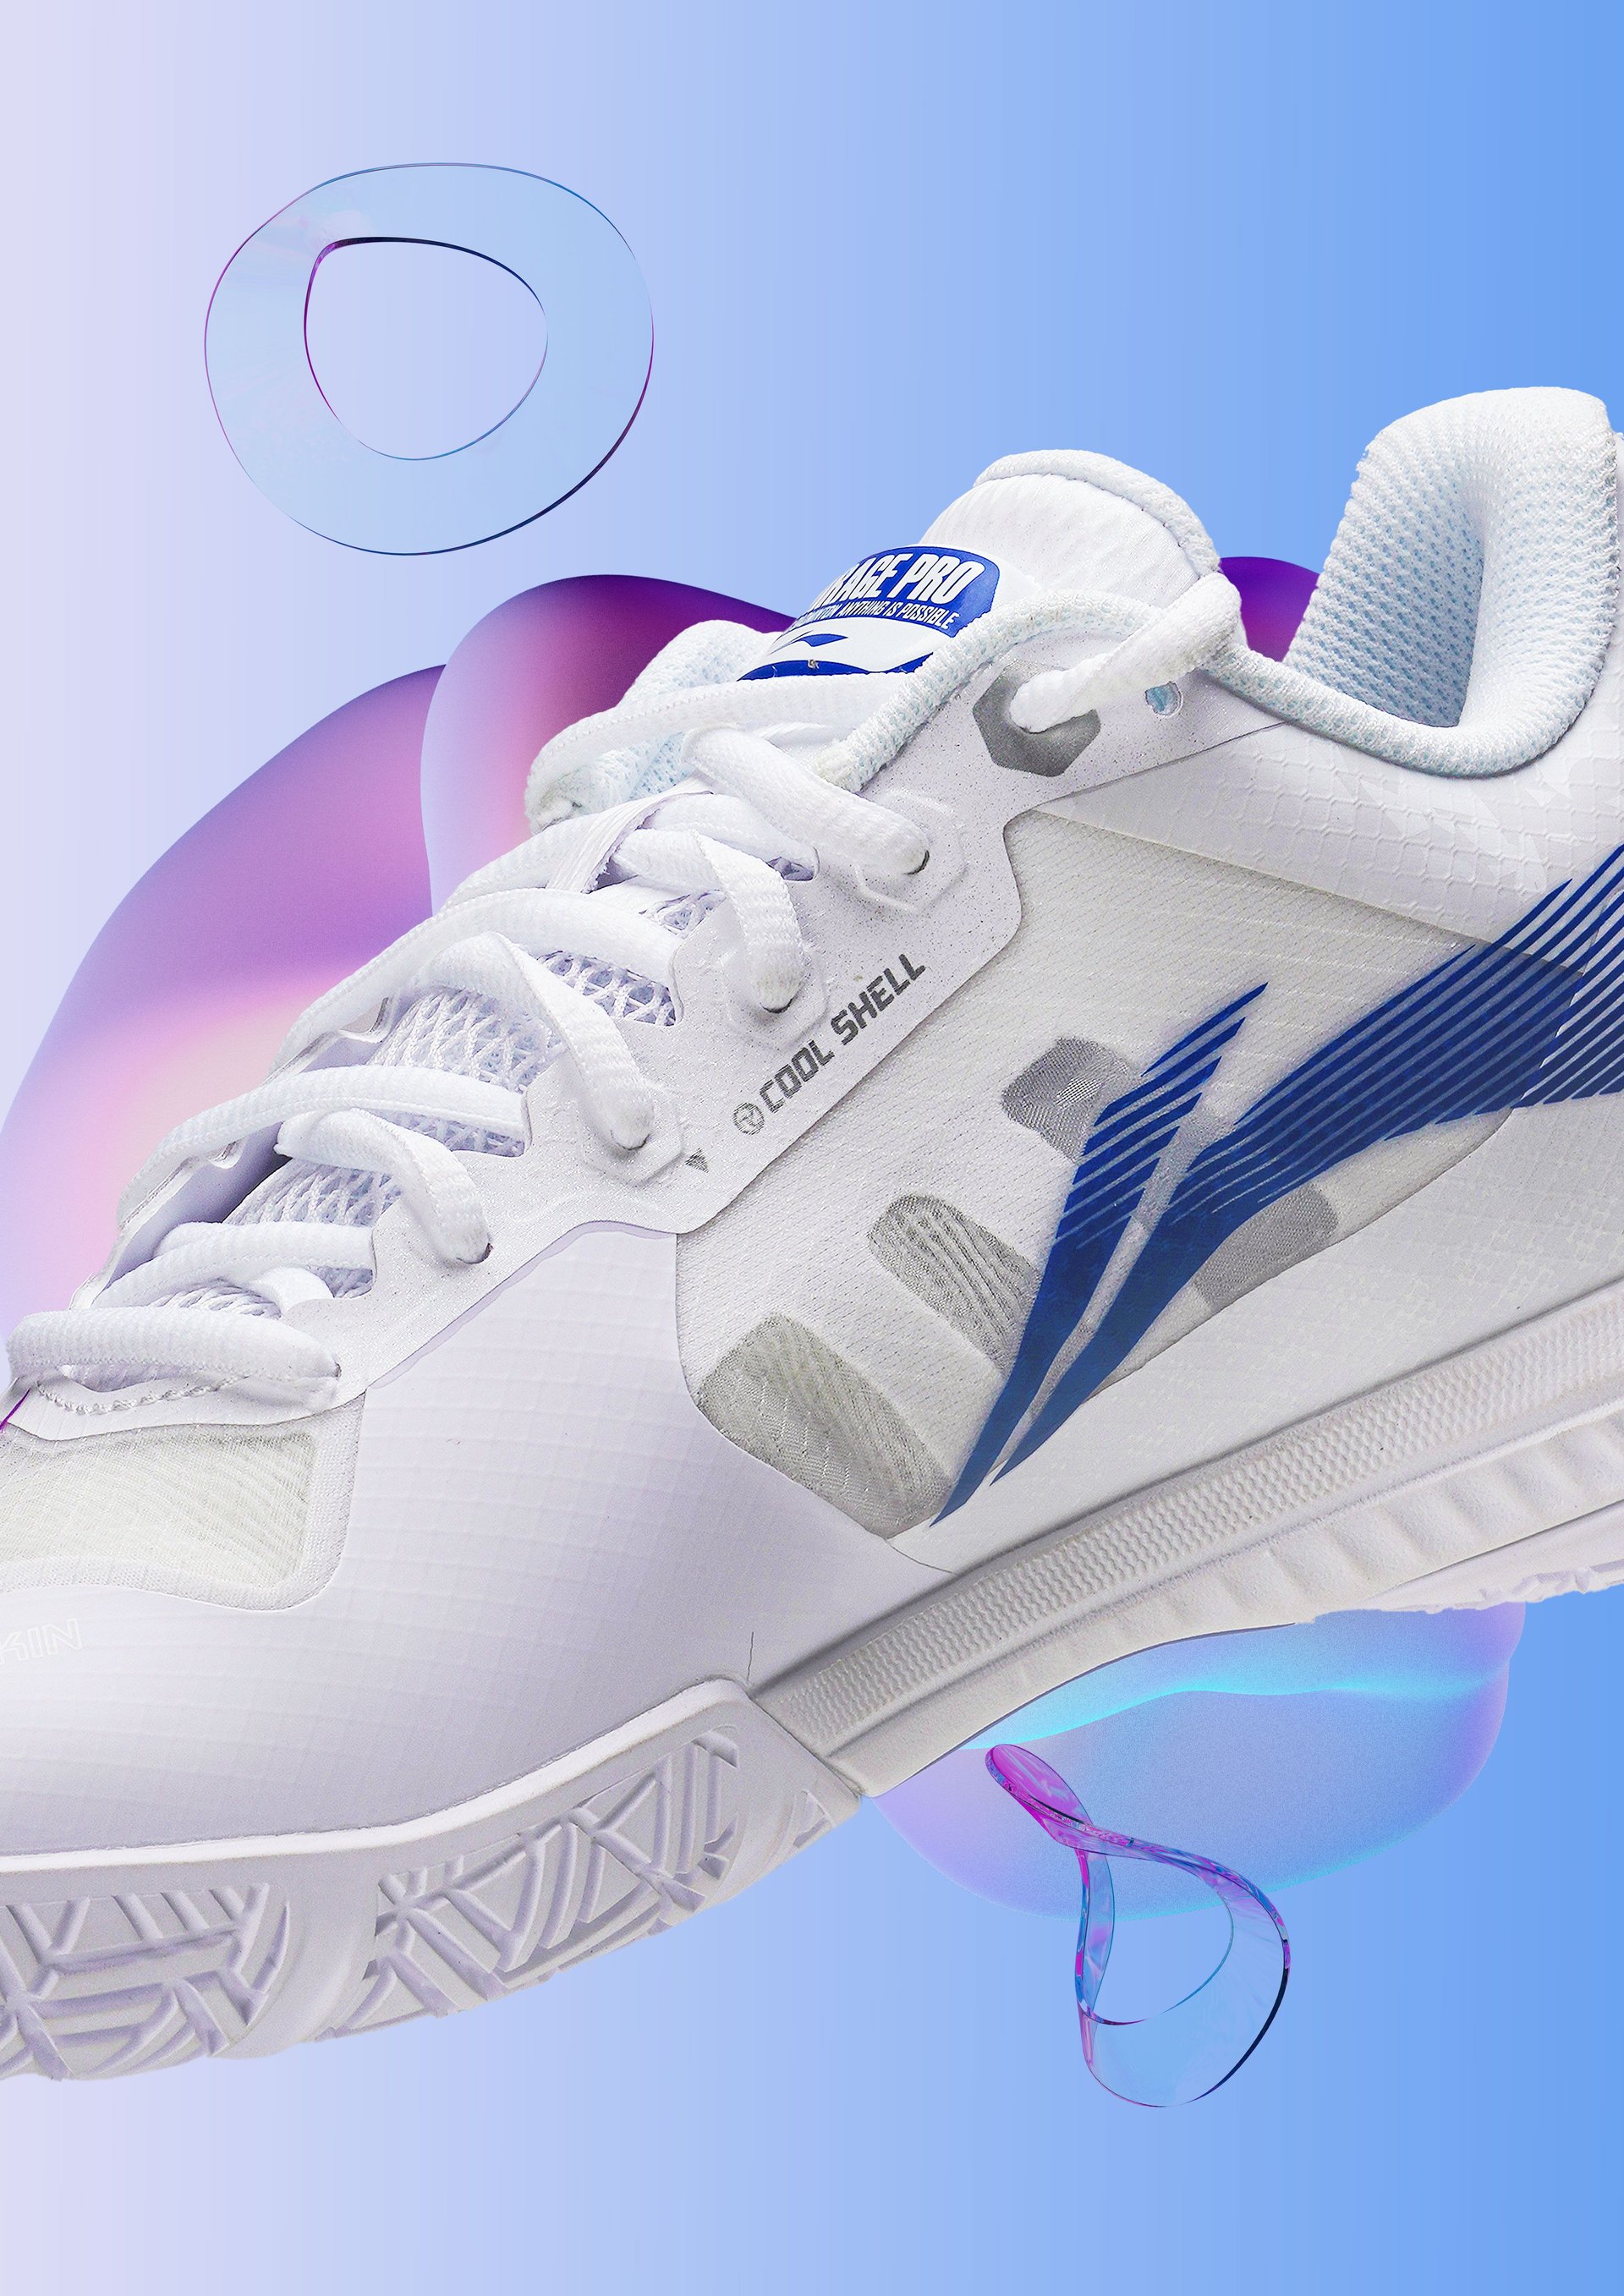 Mirage Pro - Std. White/Neon Fuschia Purple - Badminton Shoe - Boom Fibre Technology